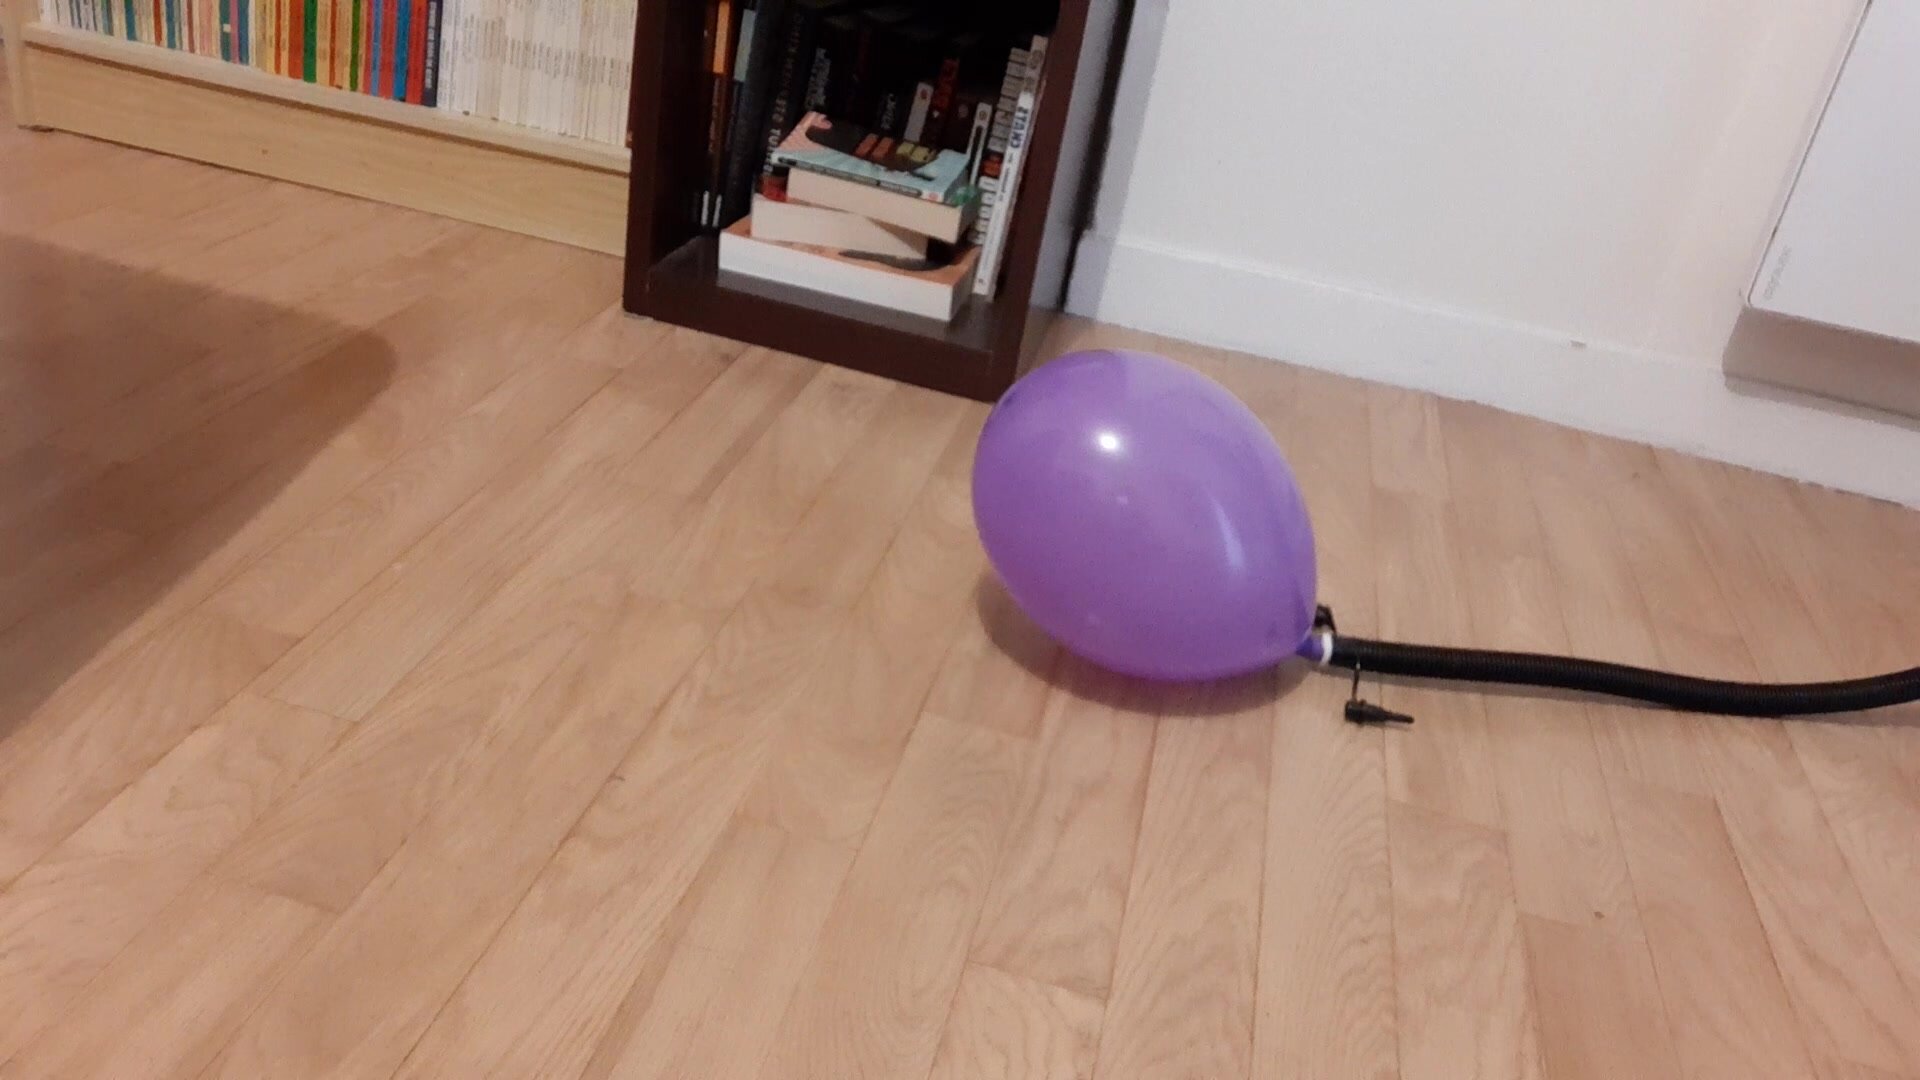 Pump to pop purple balloon